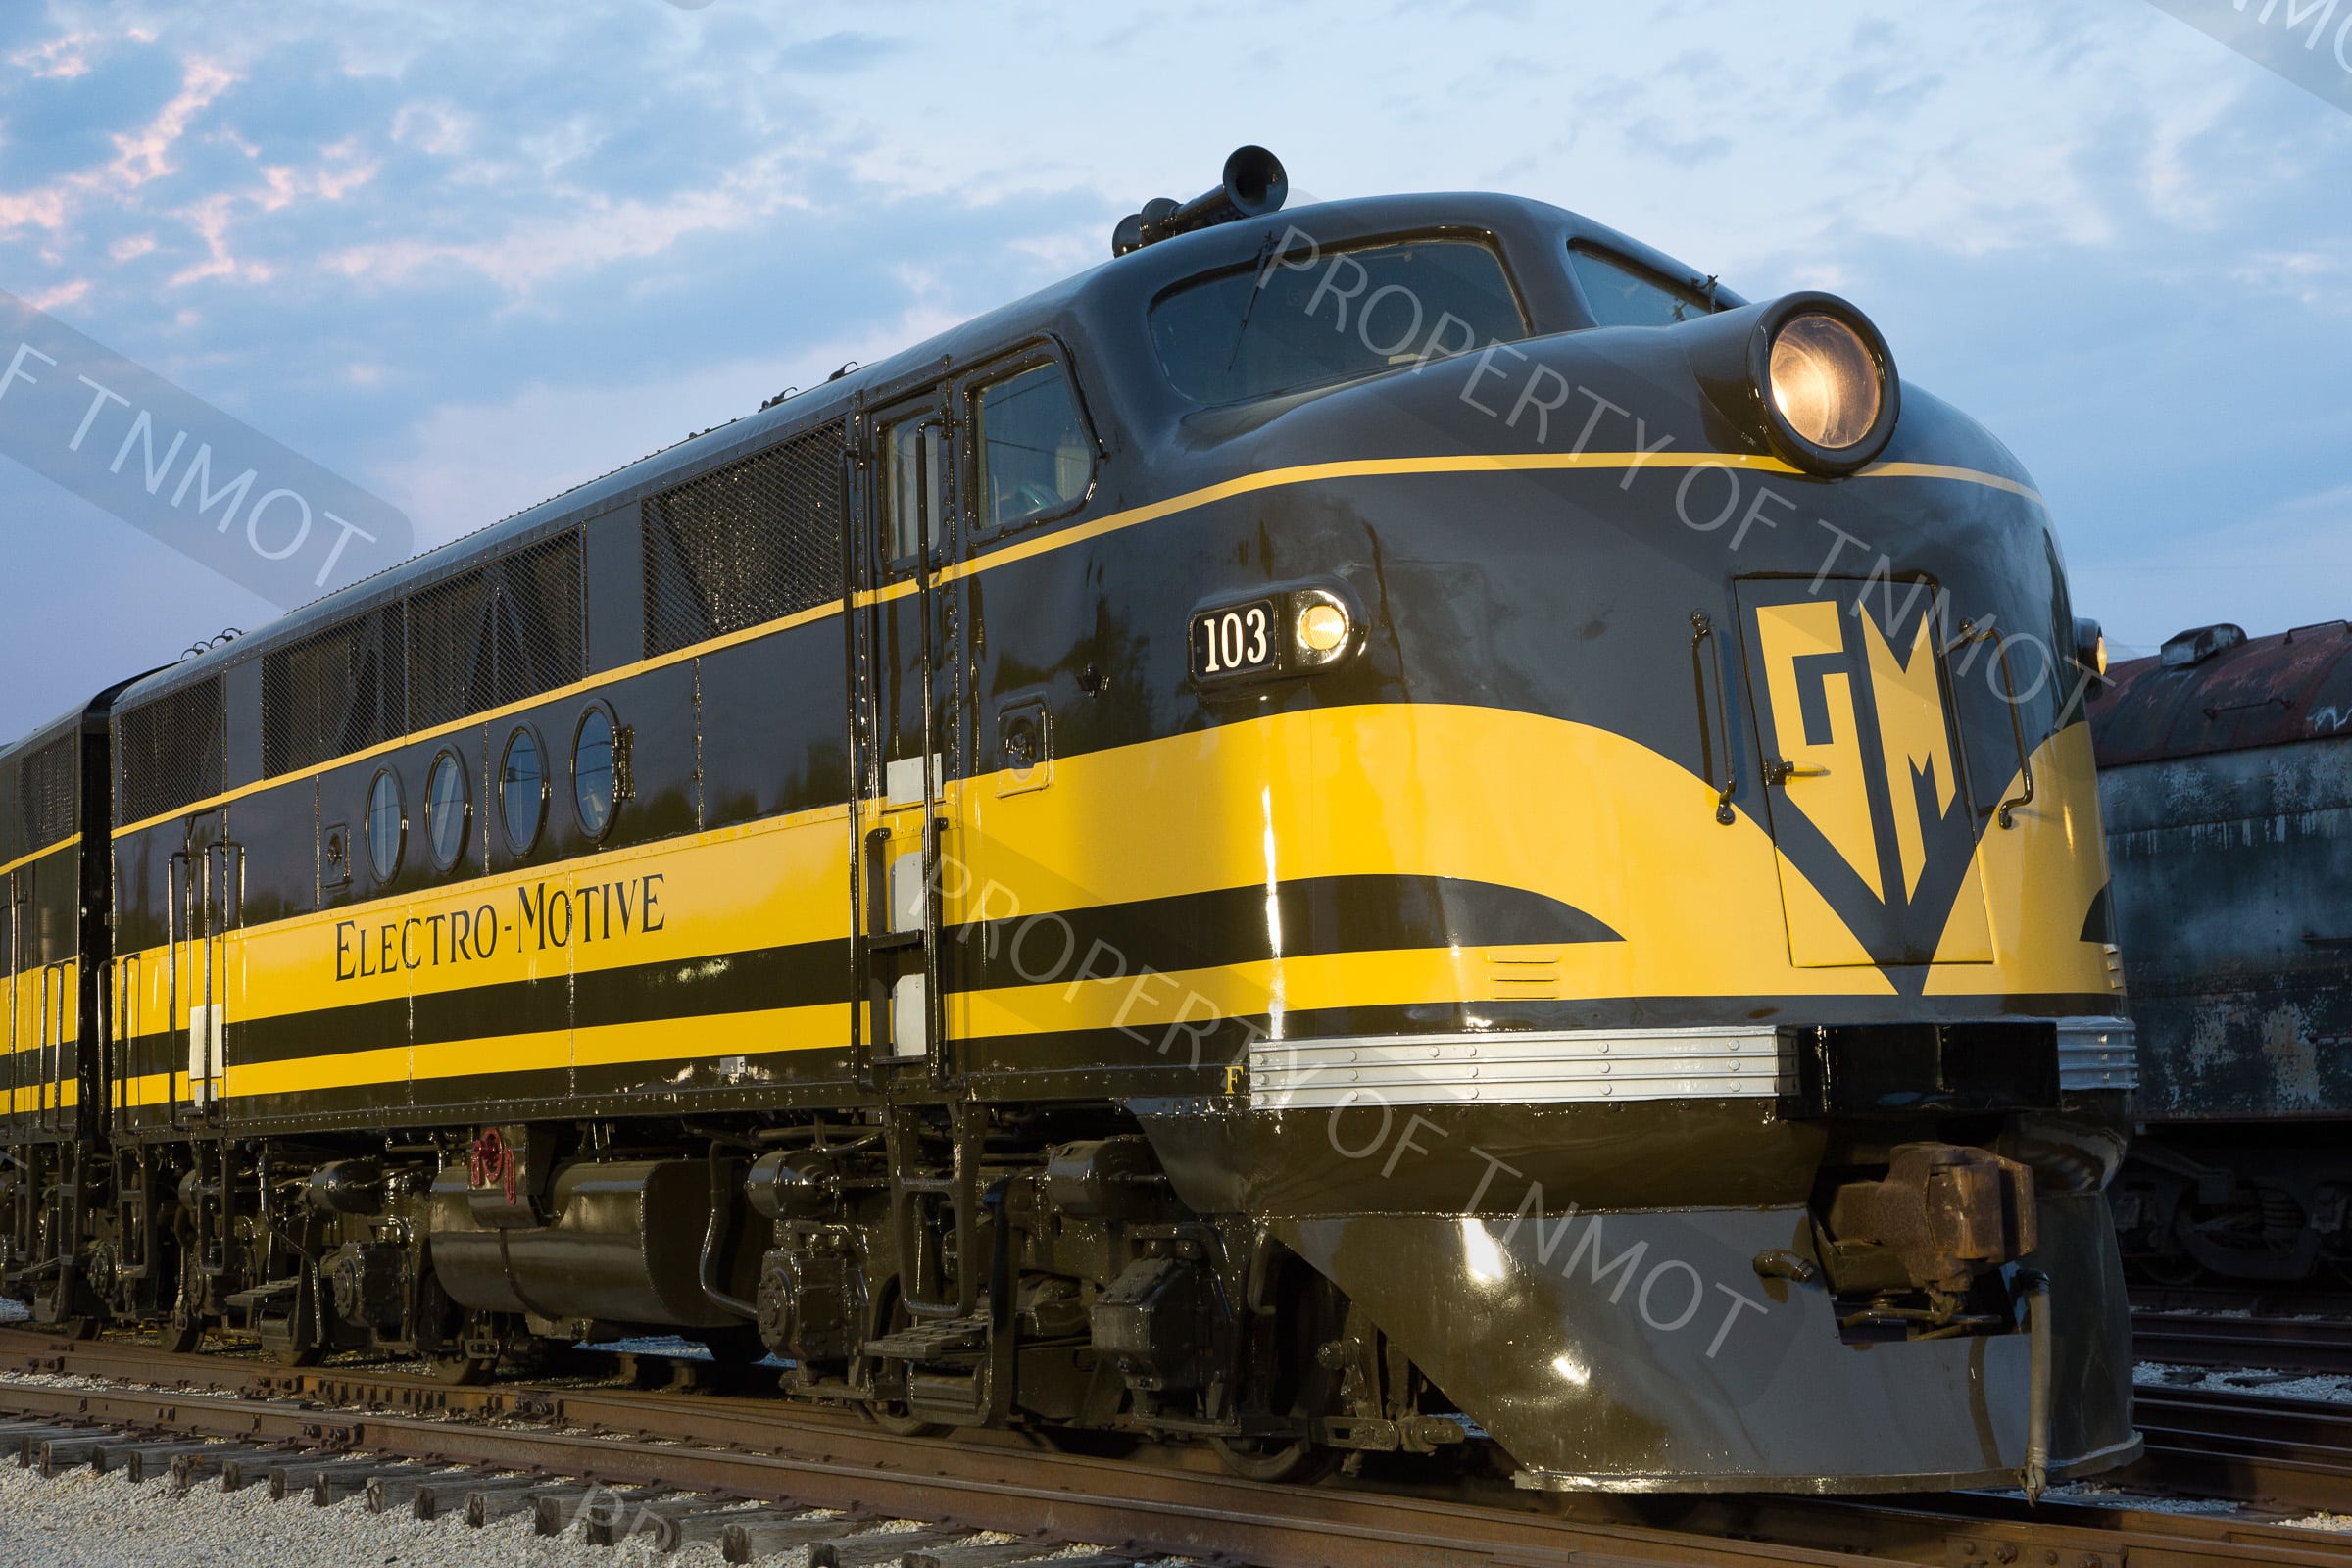 Maryland Midland F7A #101 – Railroad Mode